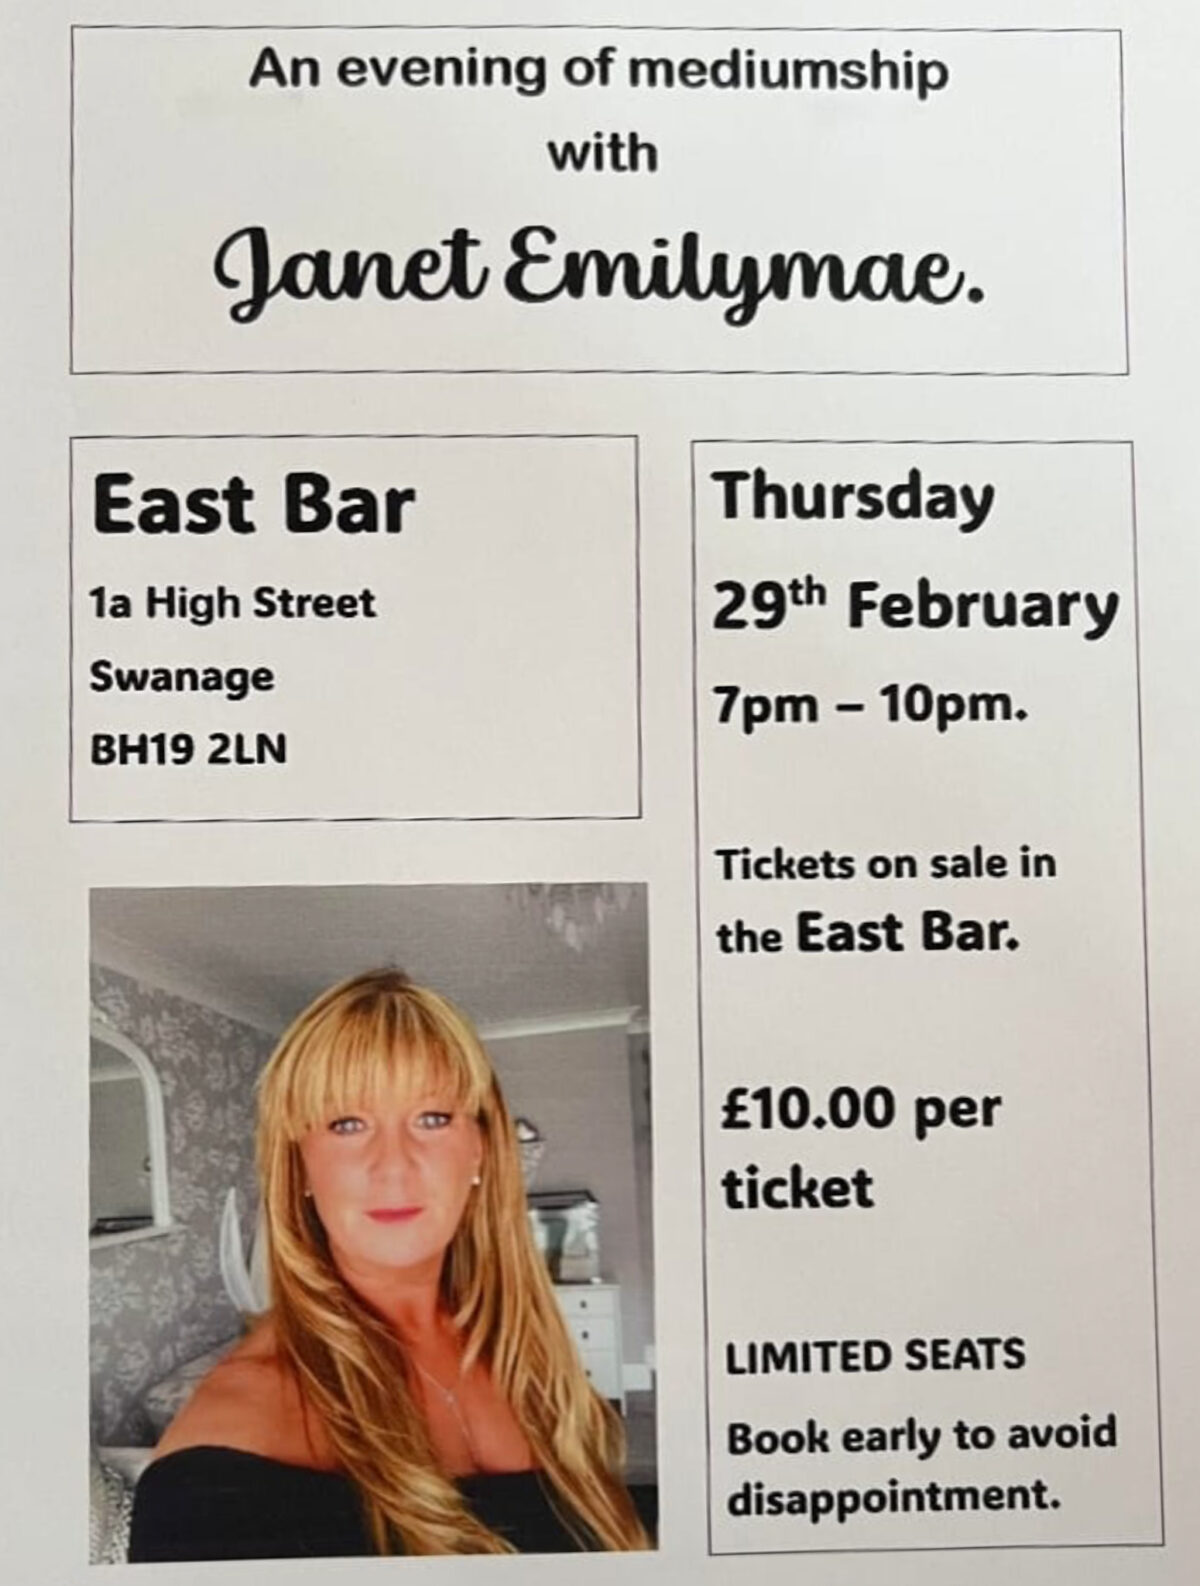 Mediumship with Janet Emilymae at East Bar flyer